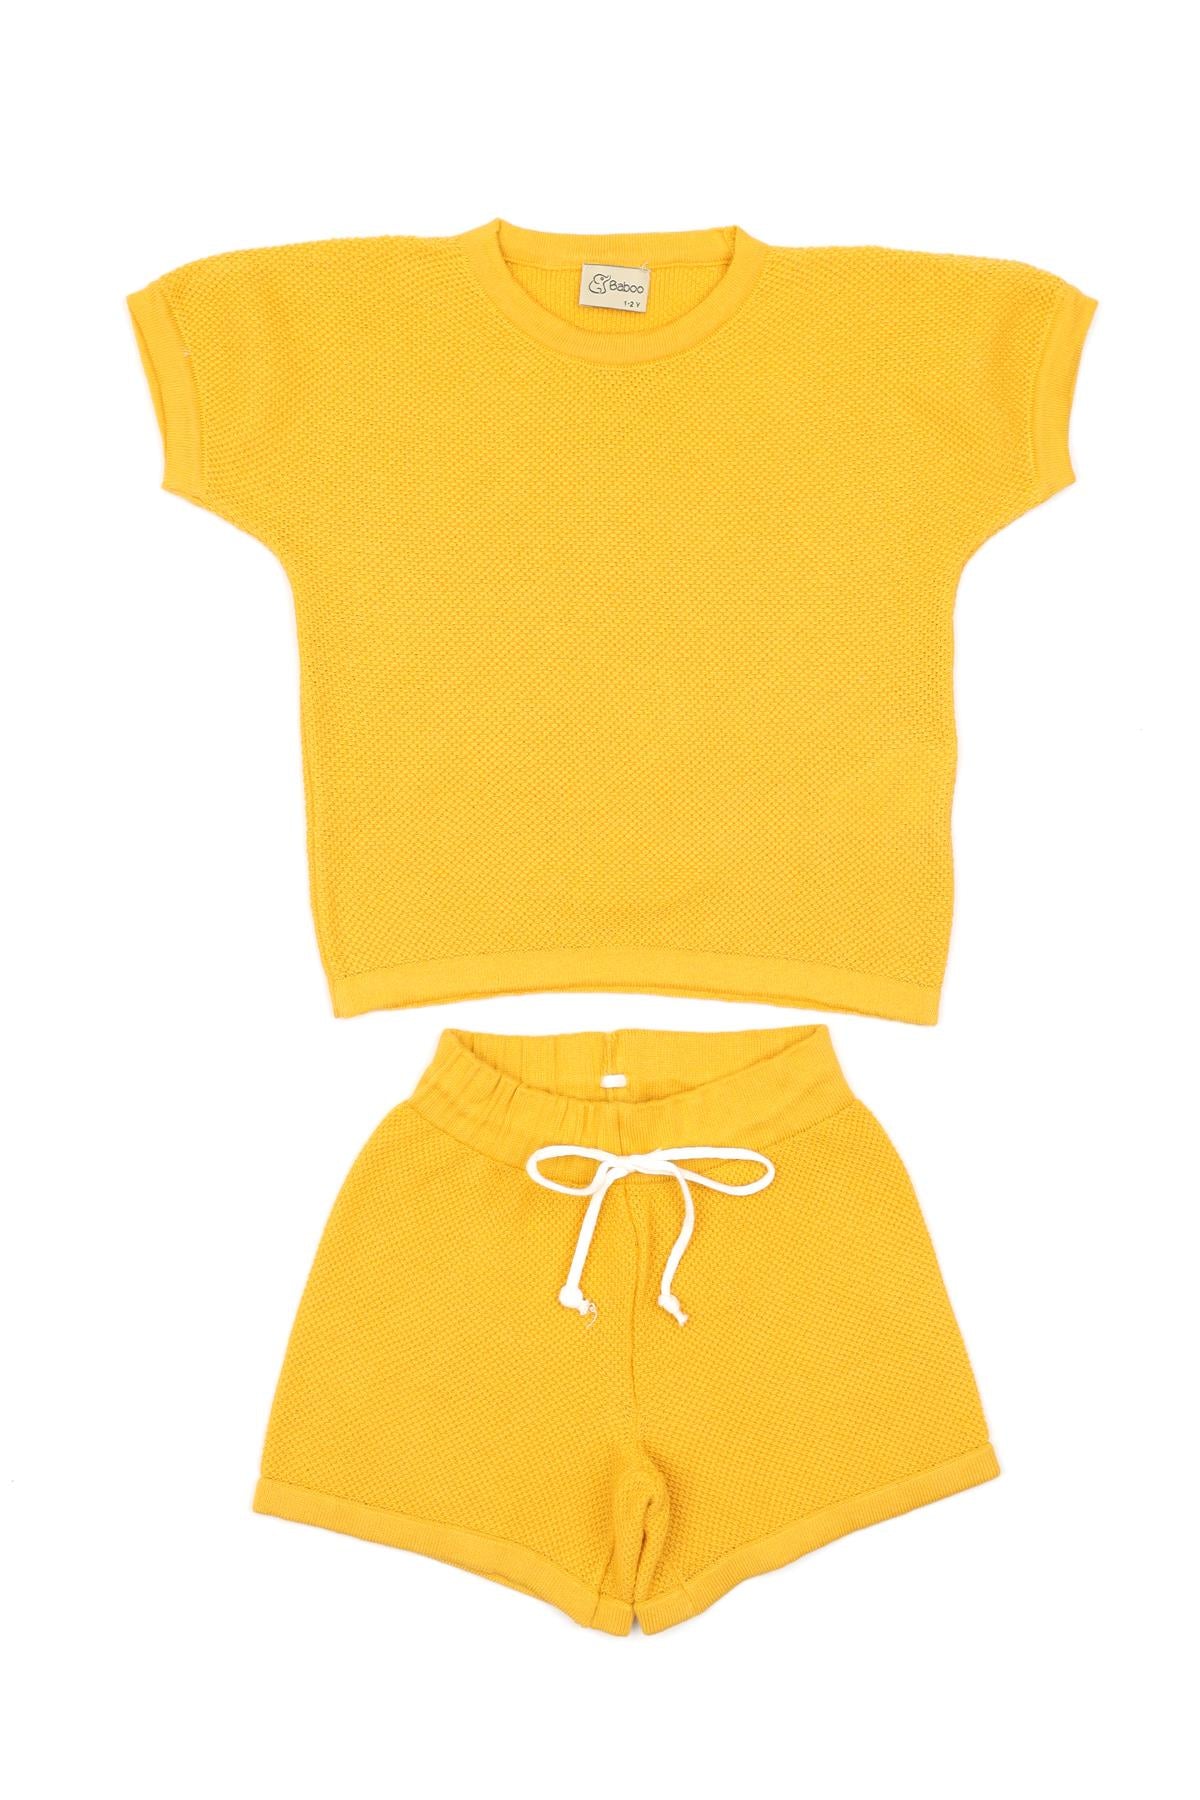 Summer, Spring T-Shirt Shorts Kids Suit Yellow